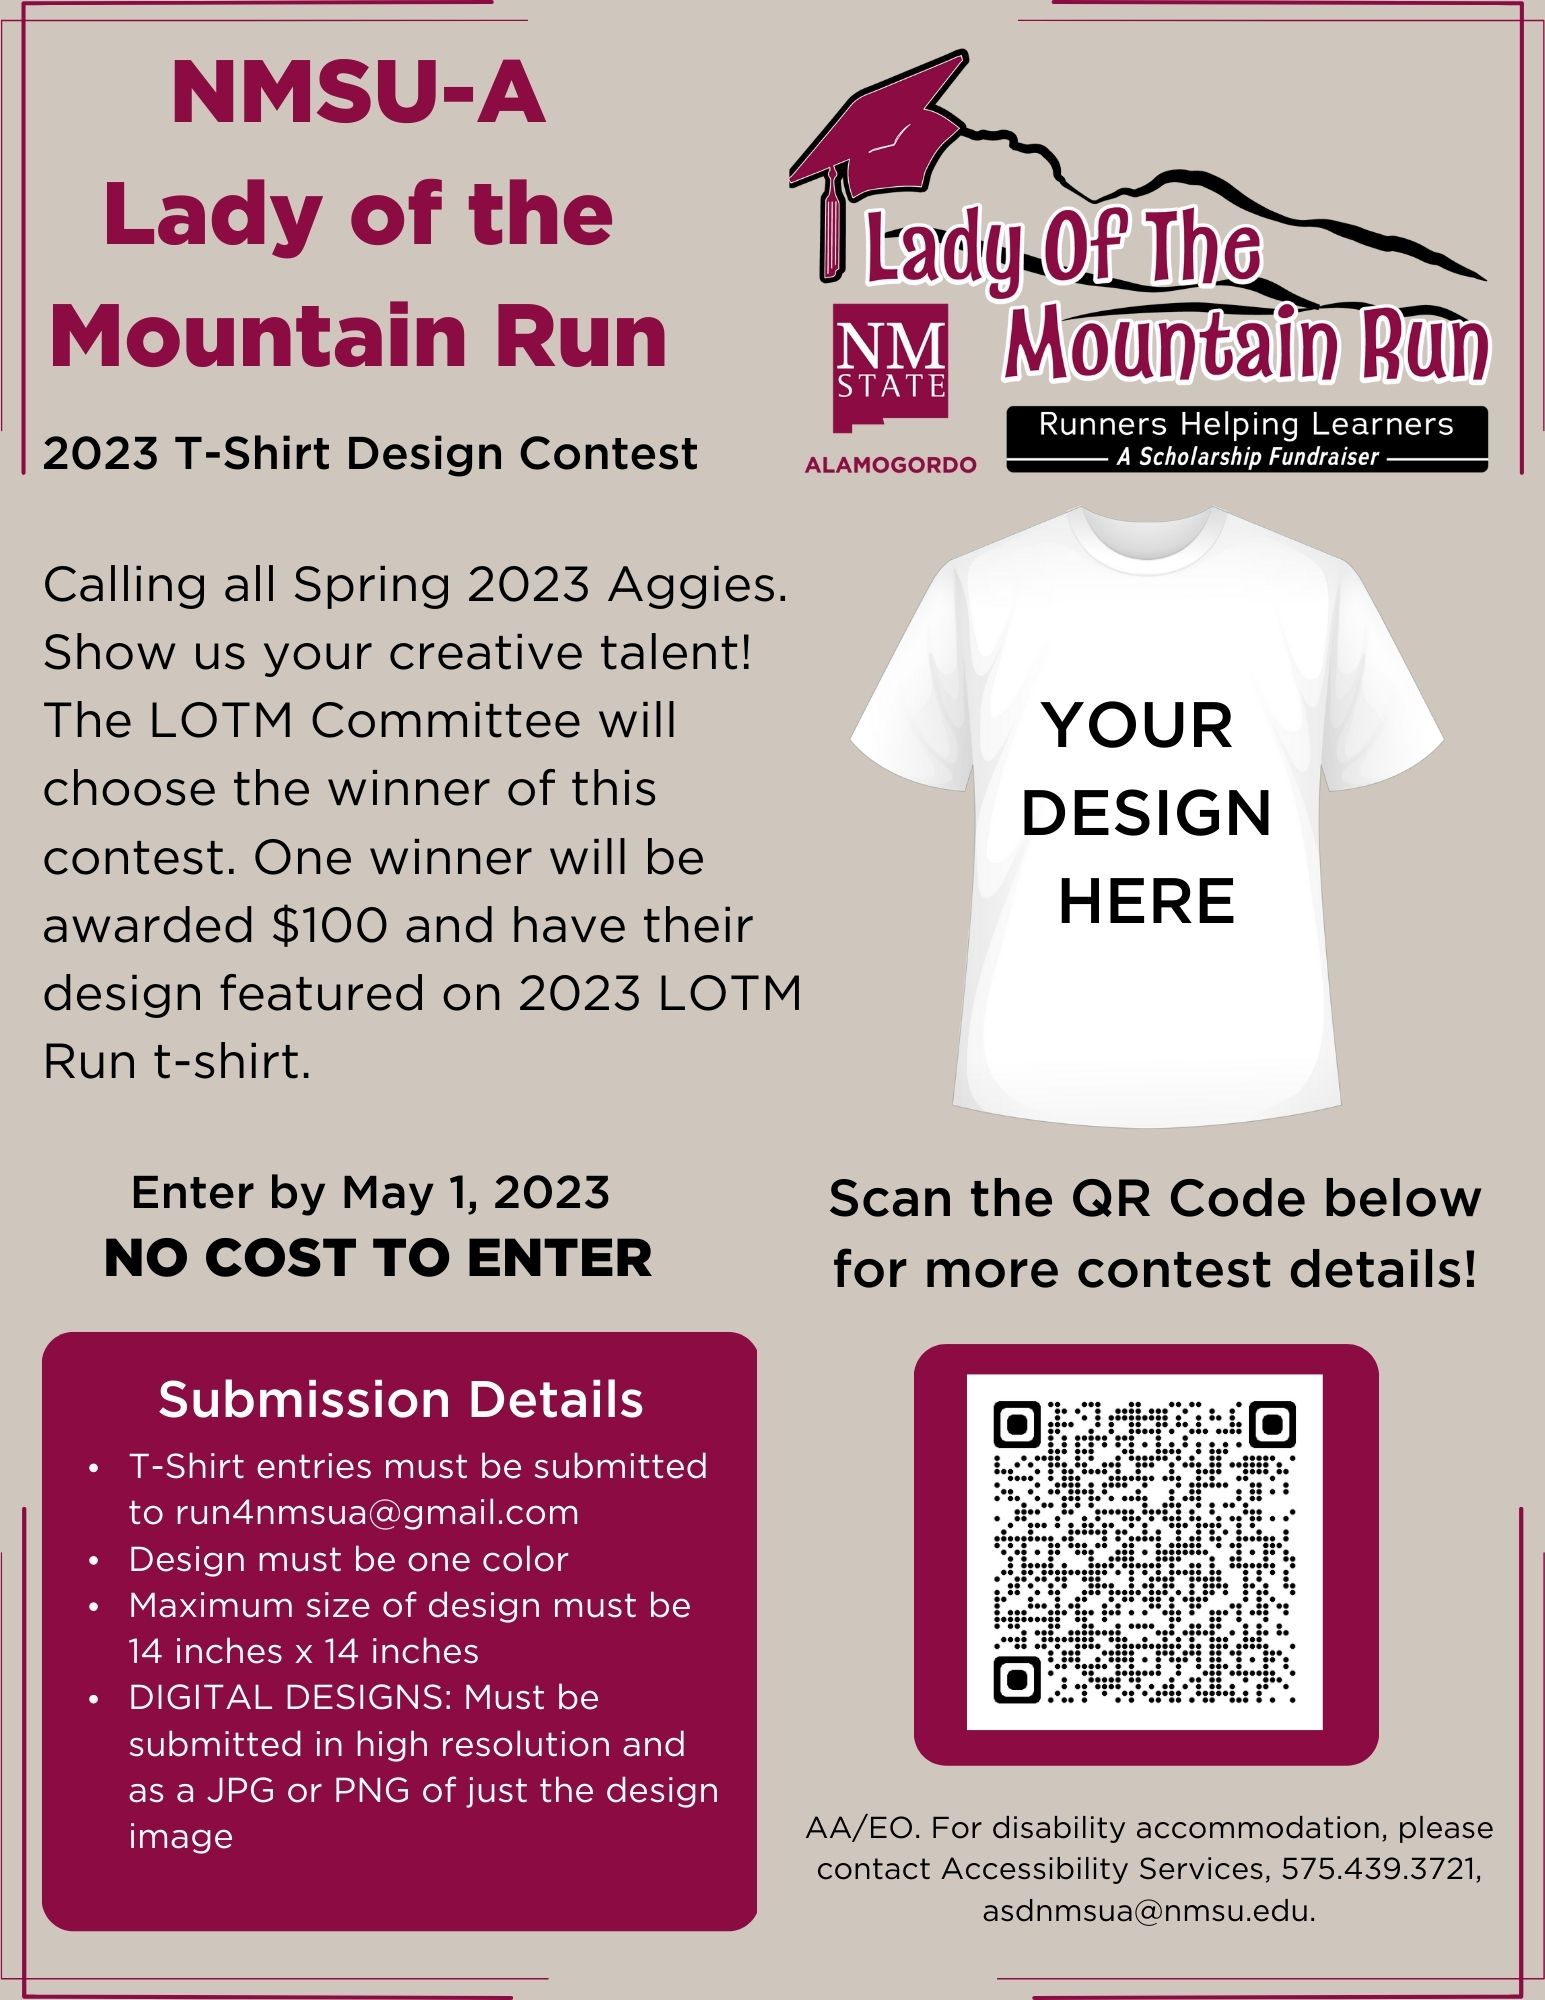 NMSU-A-Lady-of-the-Mountain-Run.png